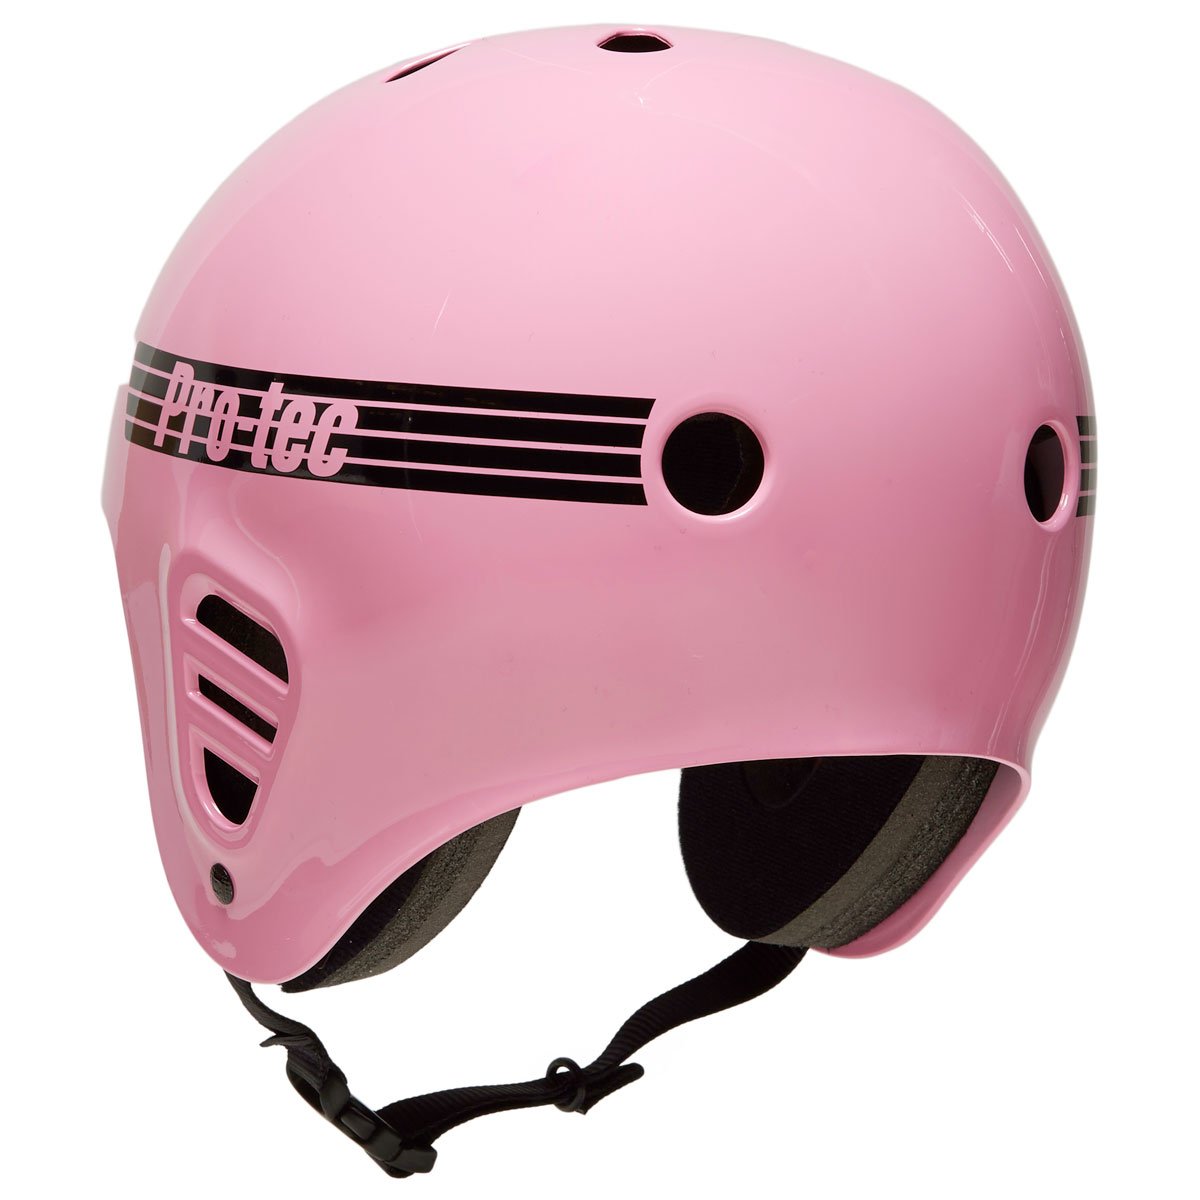 Pro-Tec Full Cut Skate Helmet - Gloss Pink image 2